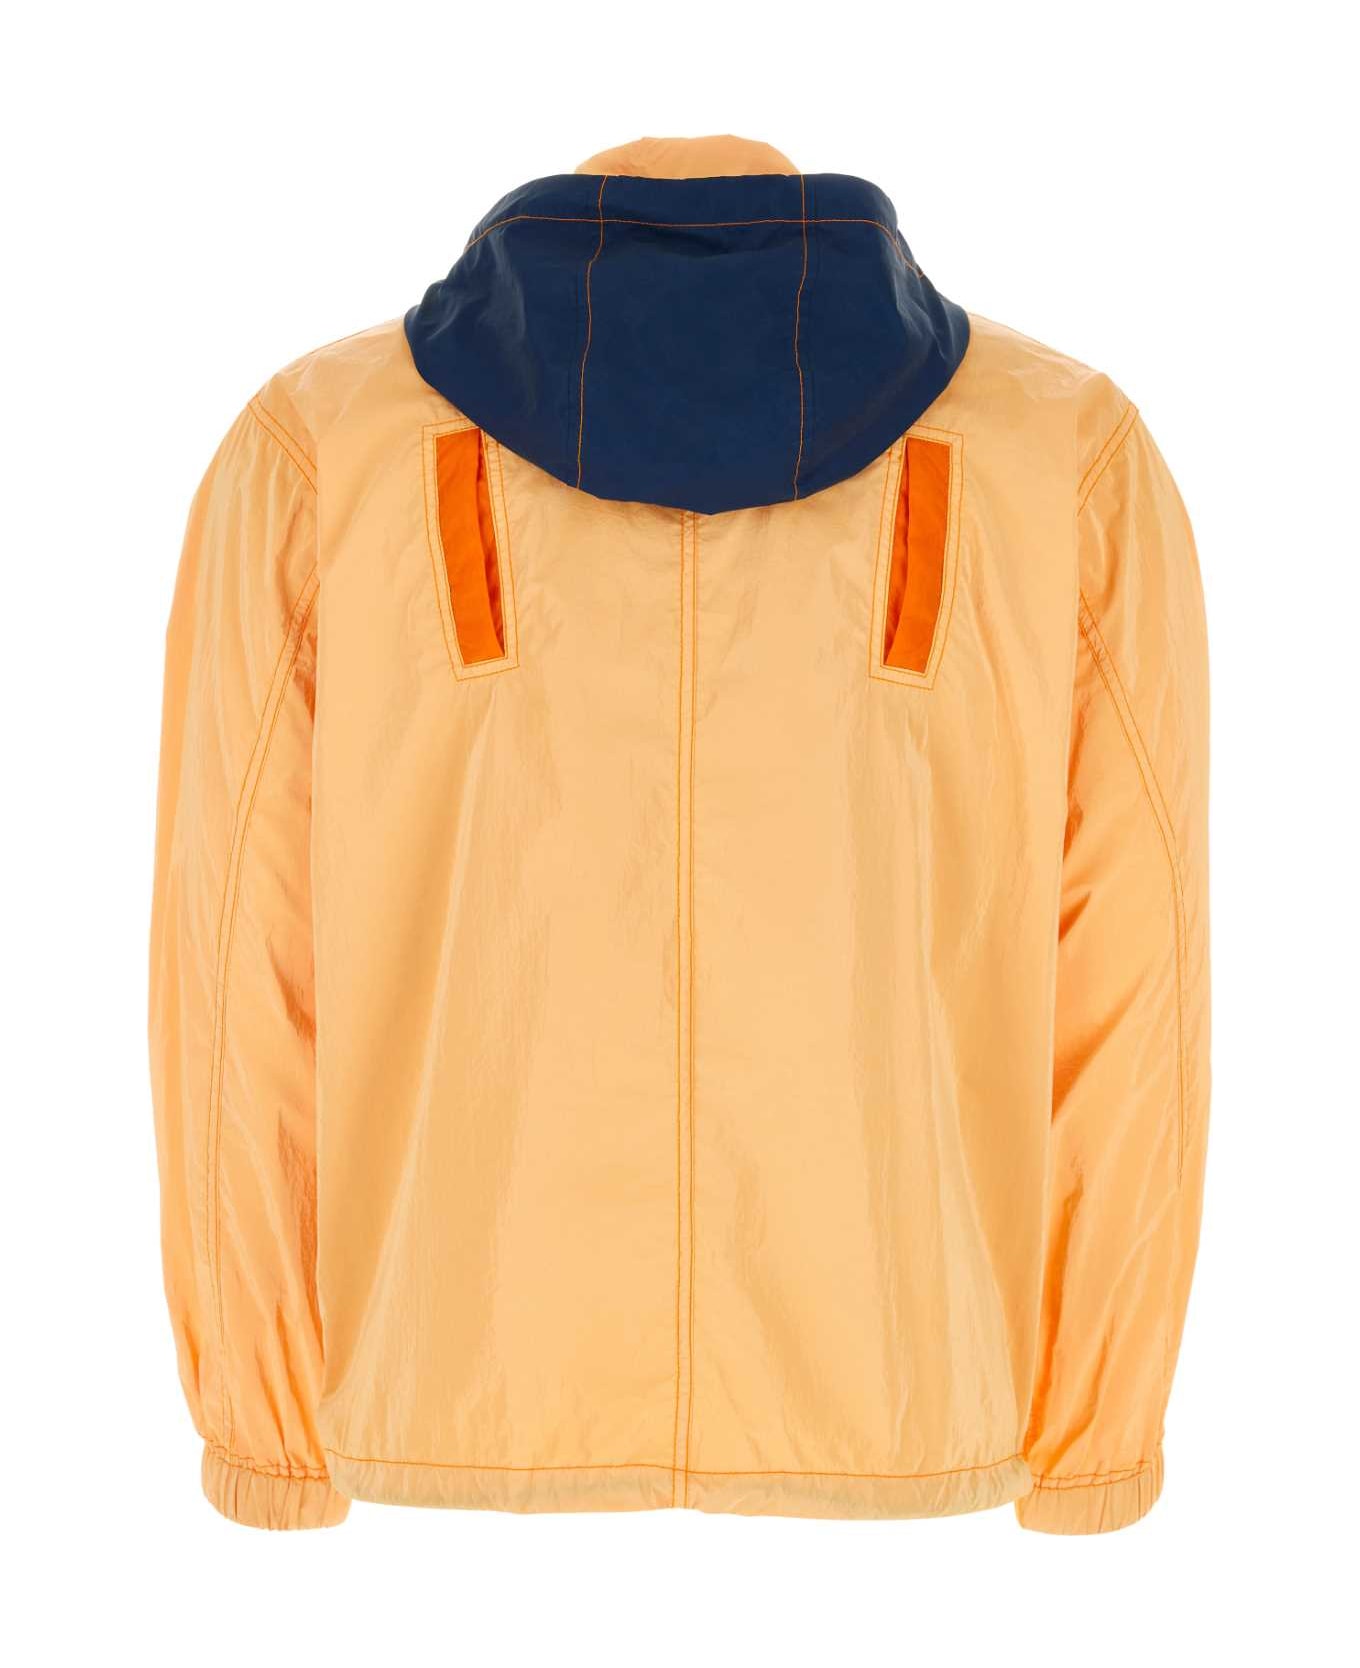 Stone Island Light Orange Nylon Ripstop Jacket - V0032 ジャケット